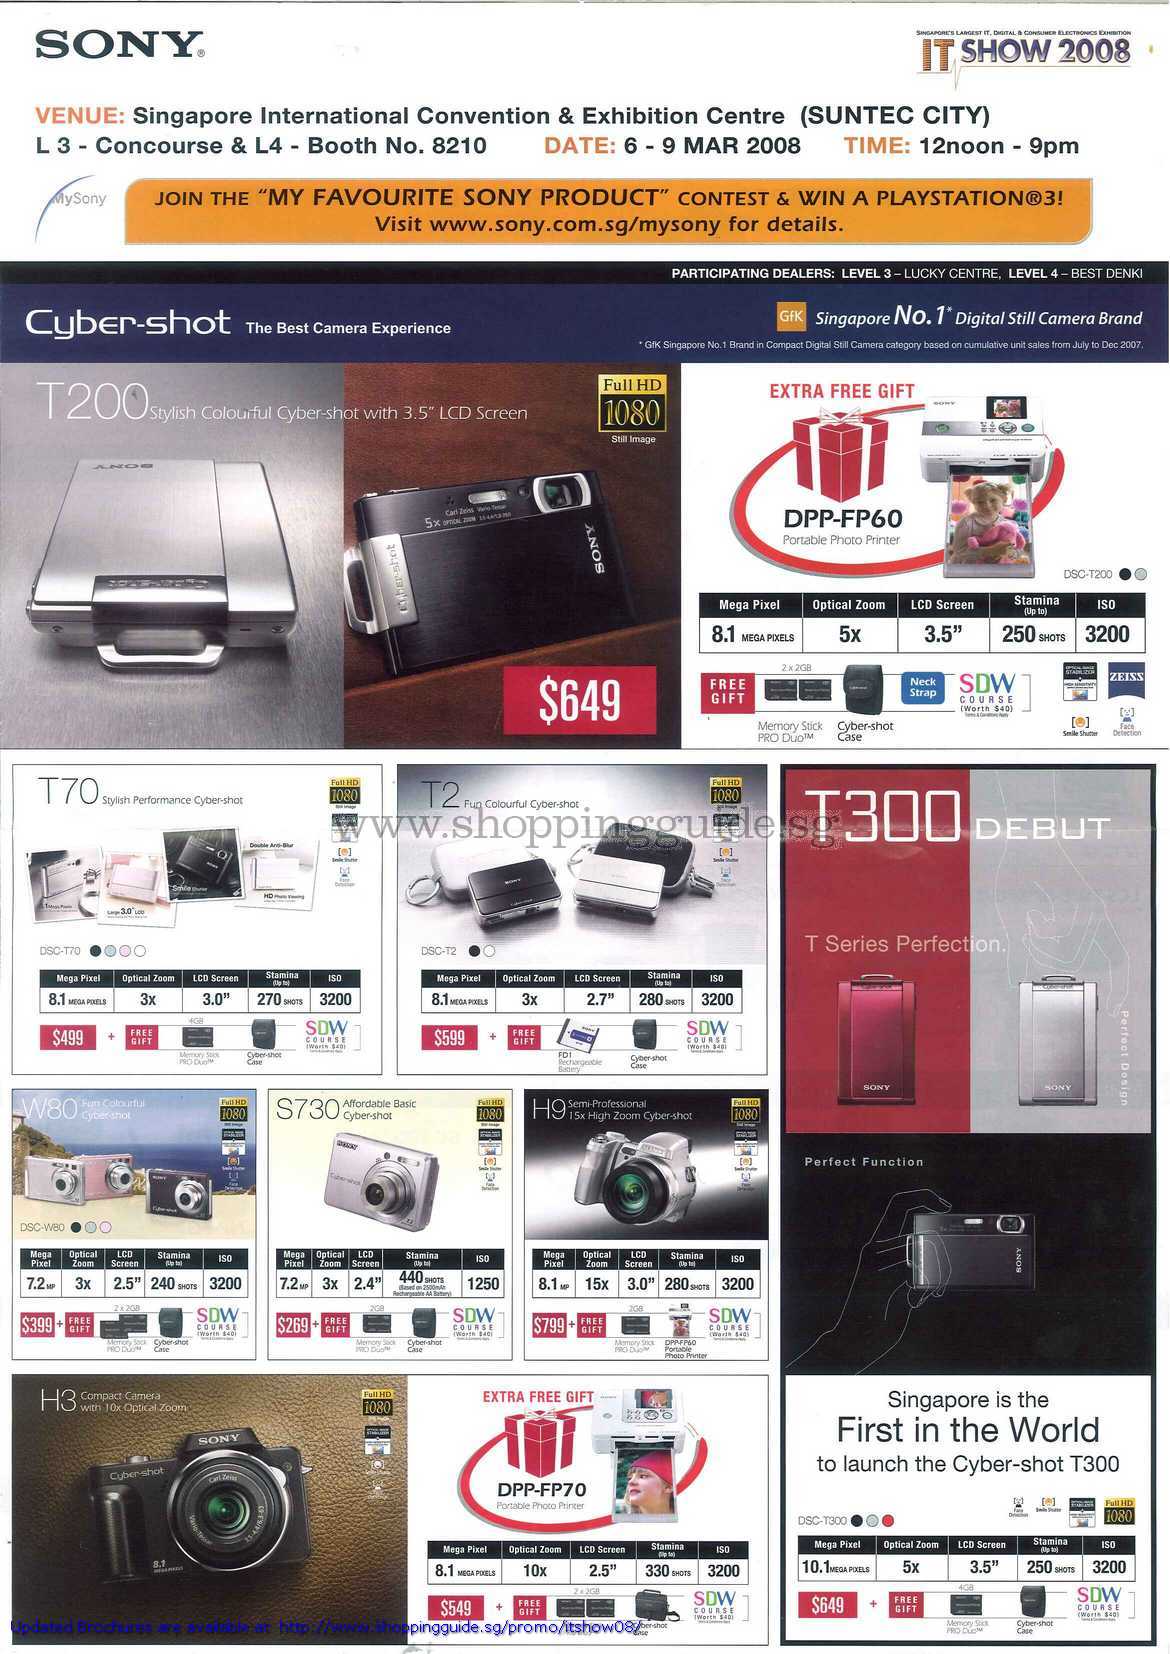 IT Show 2008 price list image brochure of Sony Cybershot Digital Cameras T200 T70 T2 T300 W80 S730 H9 H3